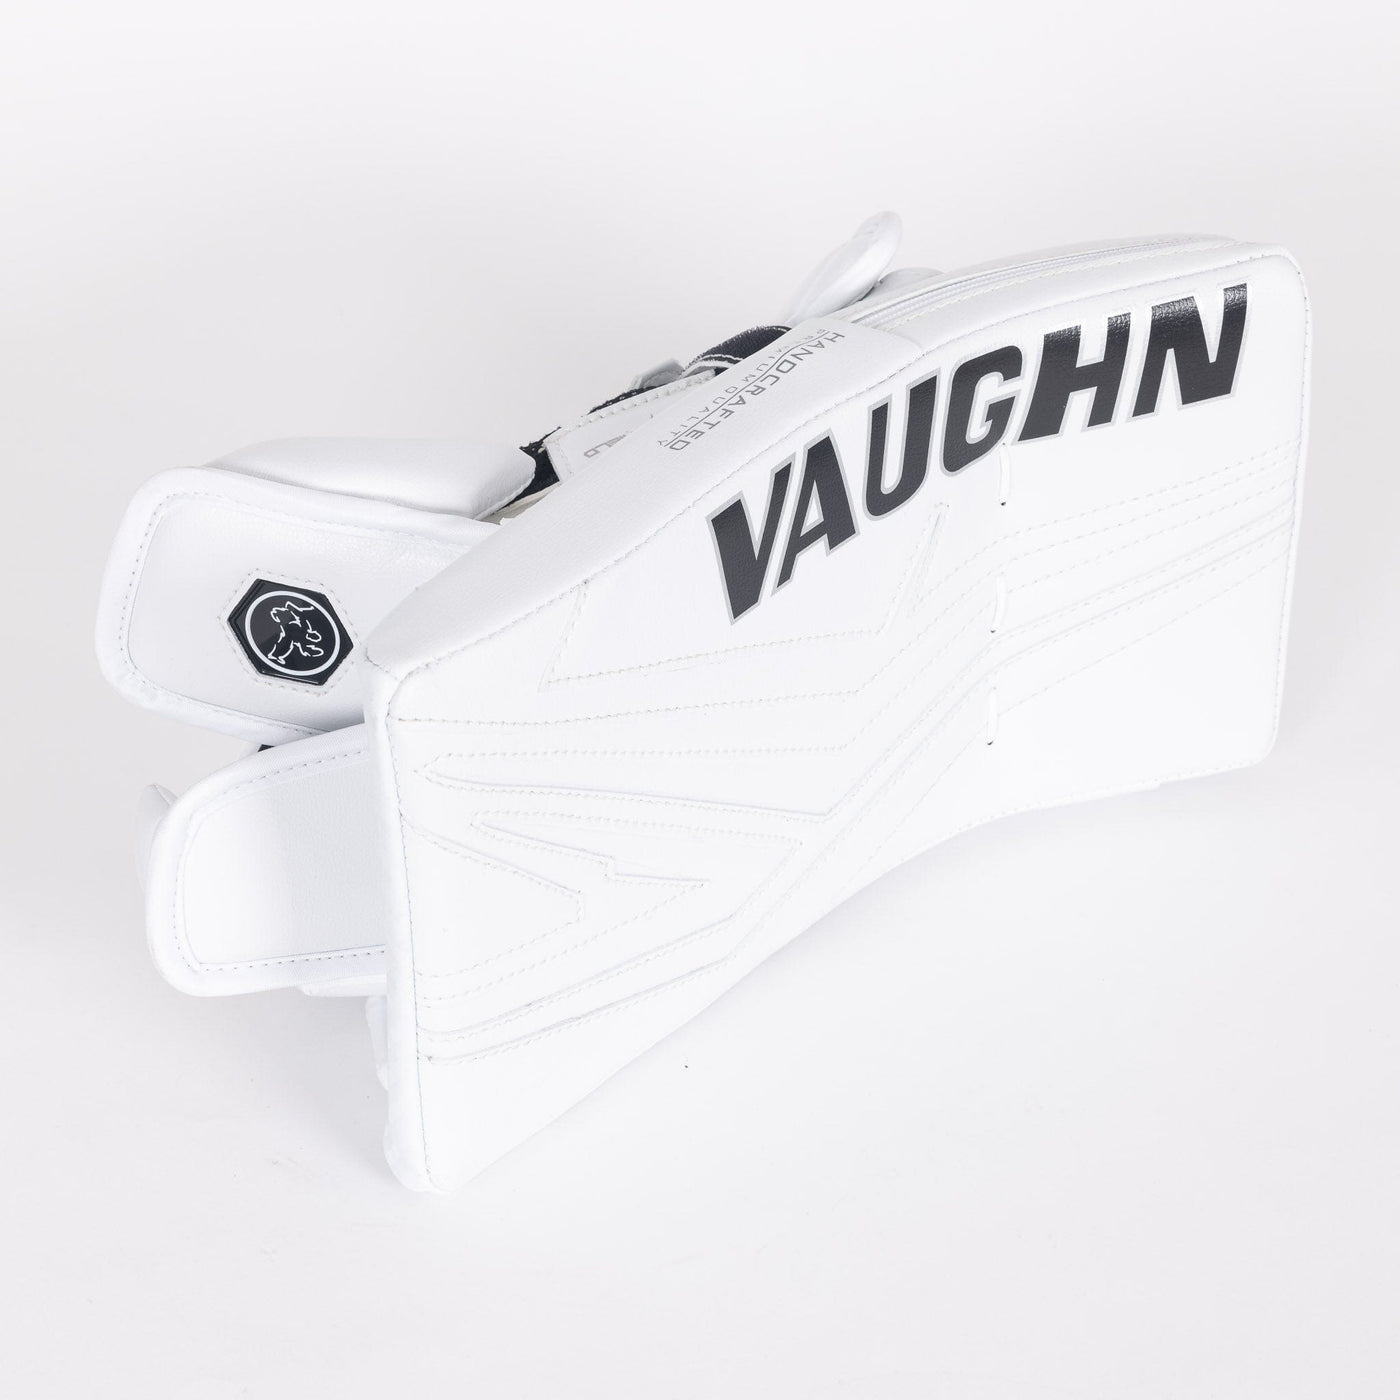 Vaughn Ventus SLR4 Pro Carbon Senior Goalie Blocker - TheHockeyShop.com